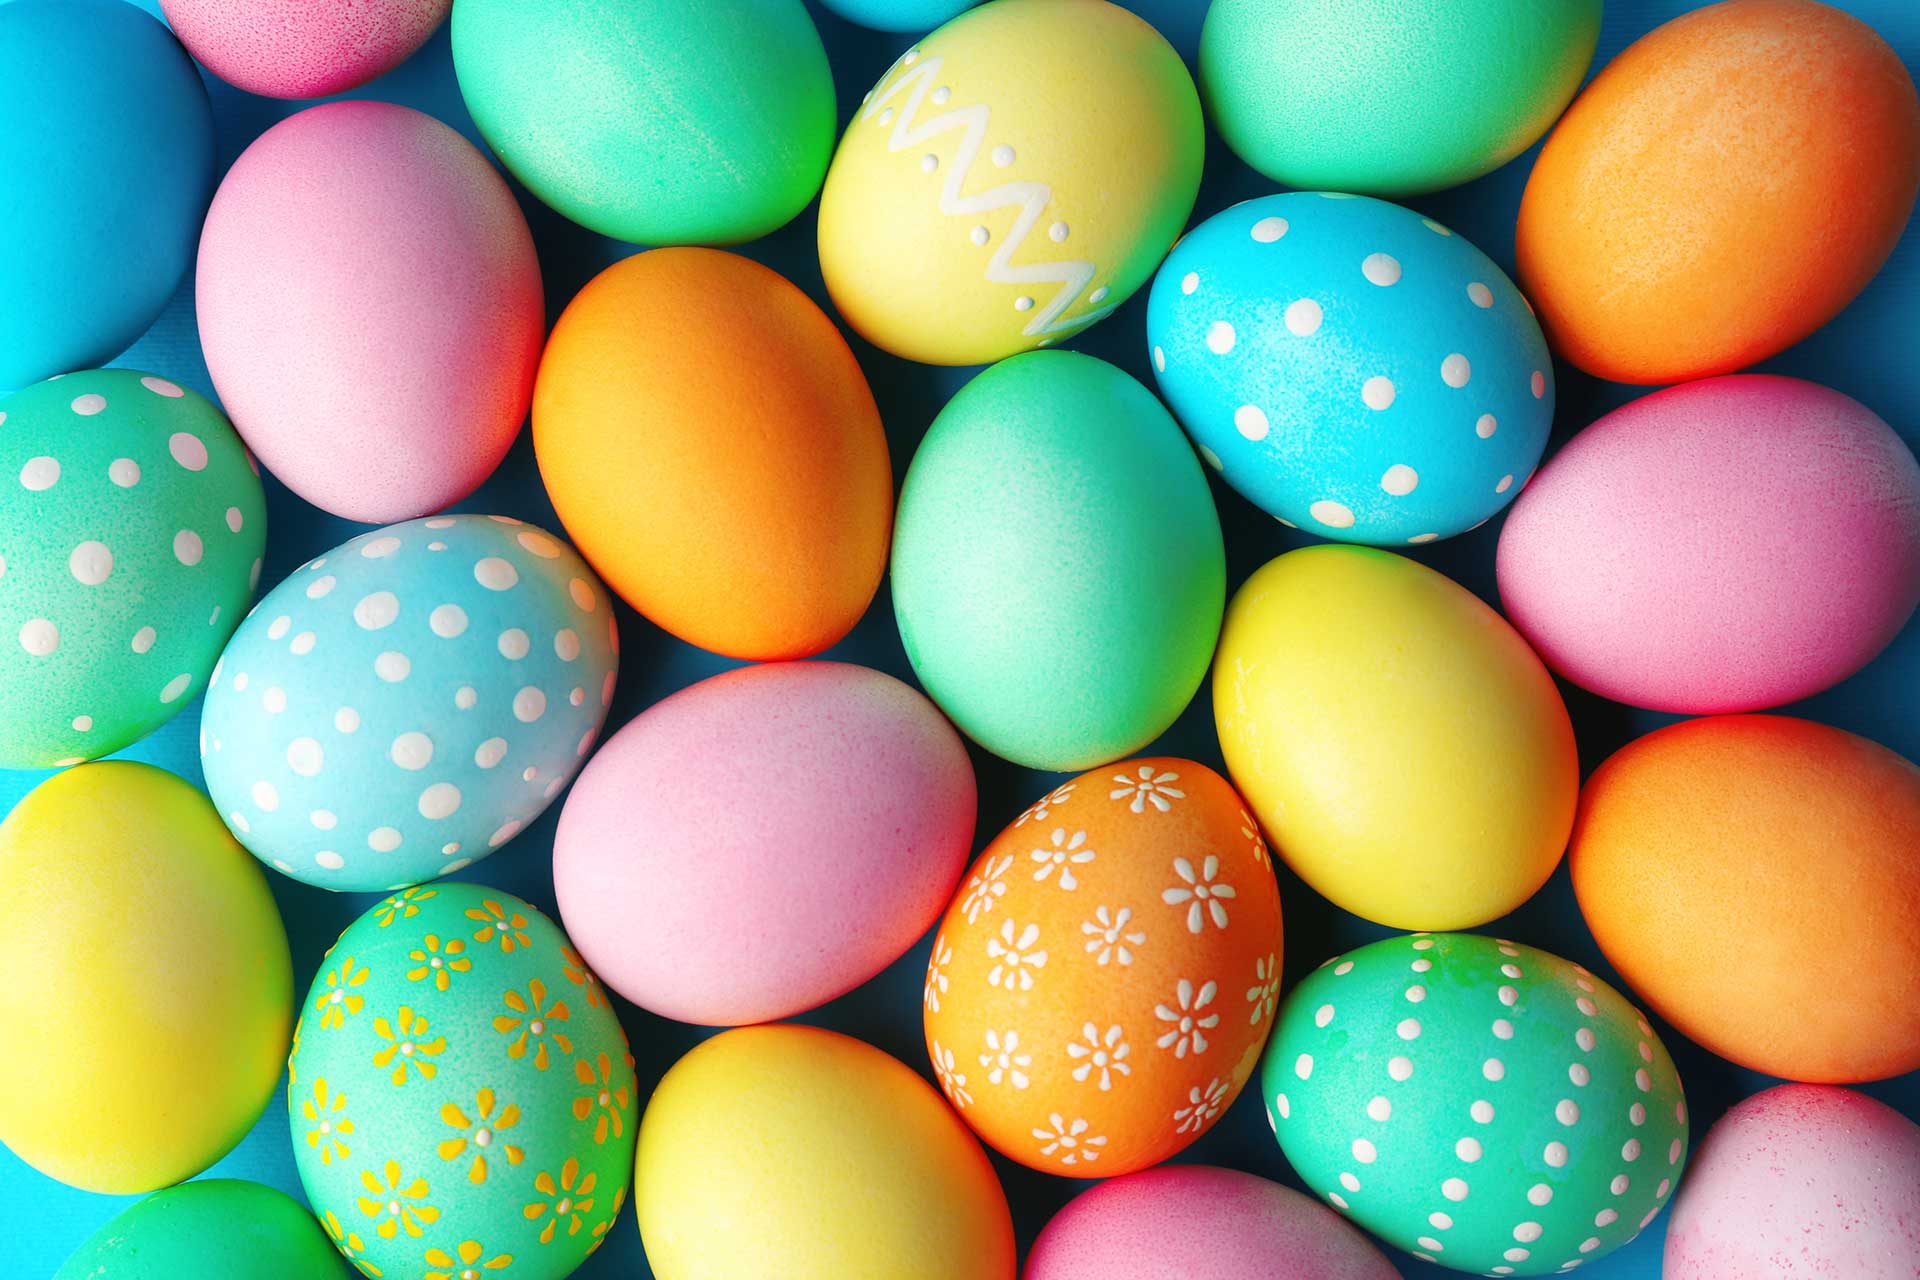 The 17 Best Hidden Internet Easter Eggs in 2018 You've Gotta See